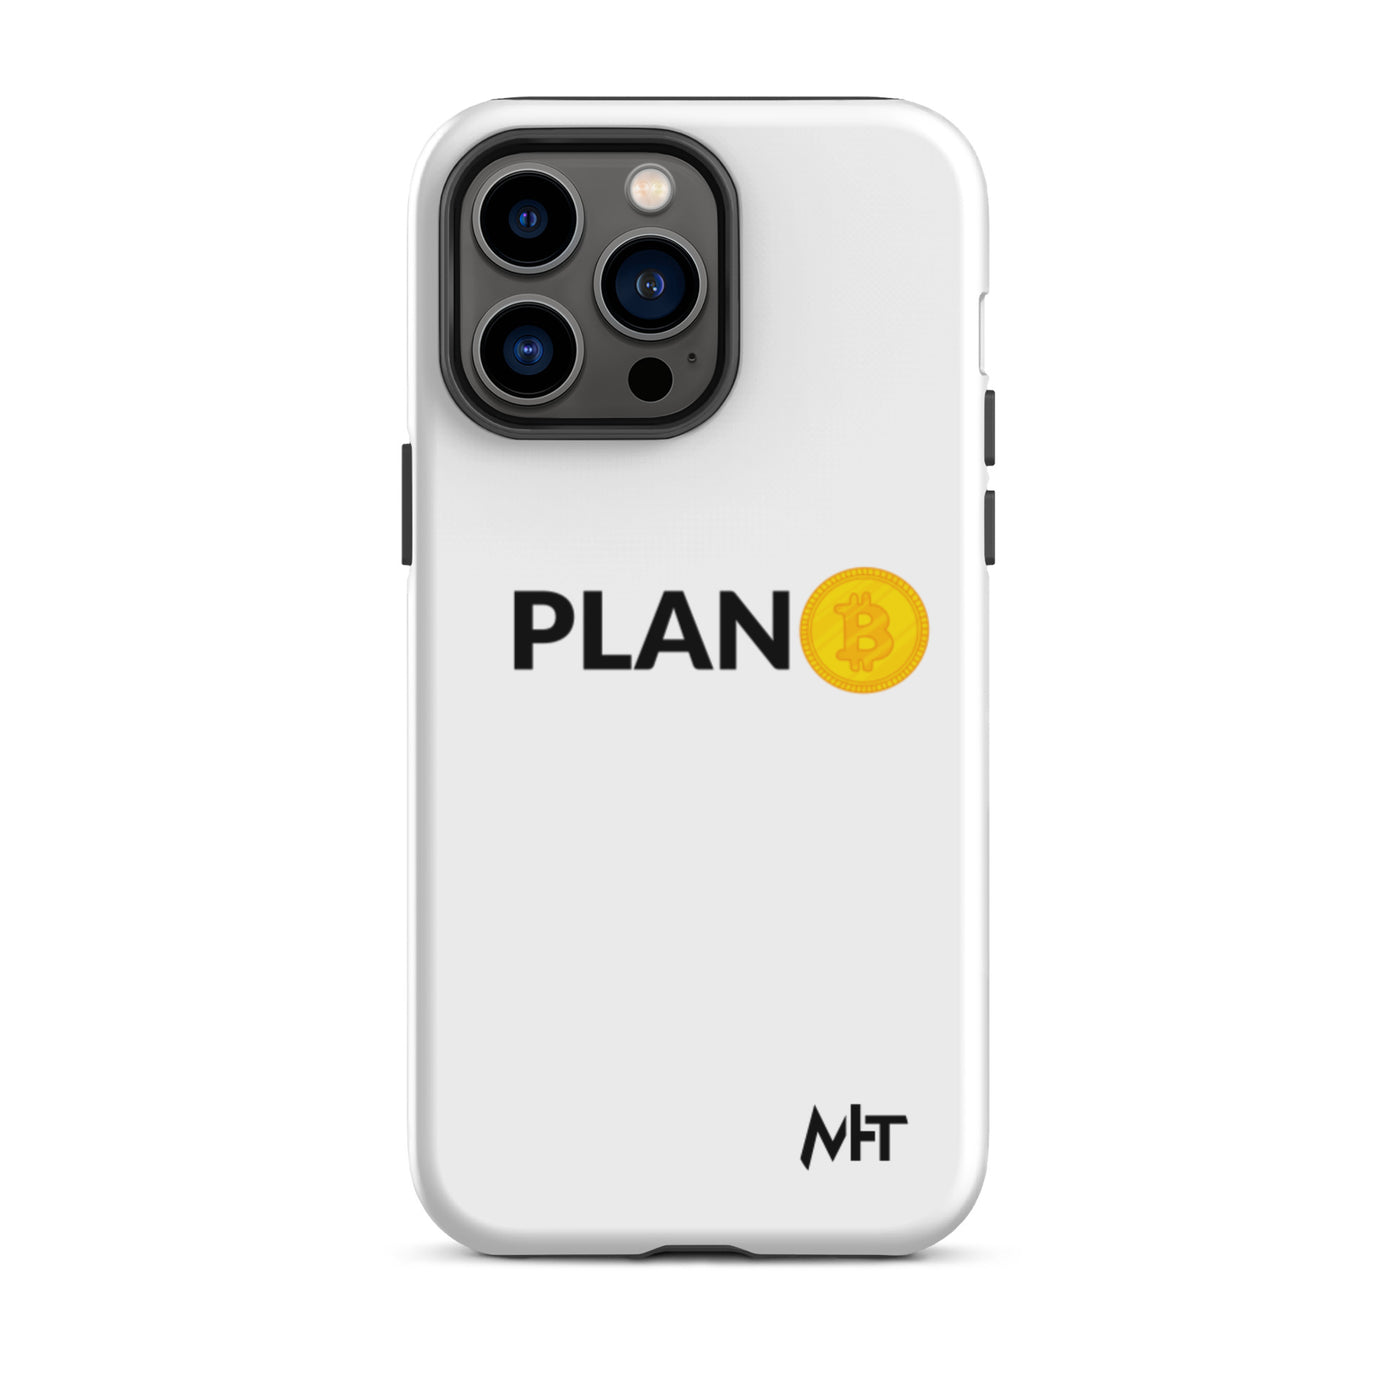 Plan B - Tough iPhone case